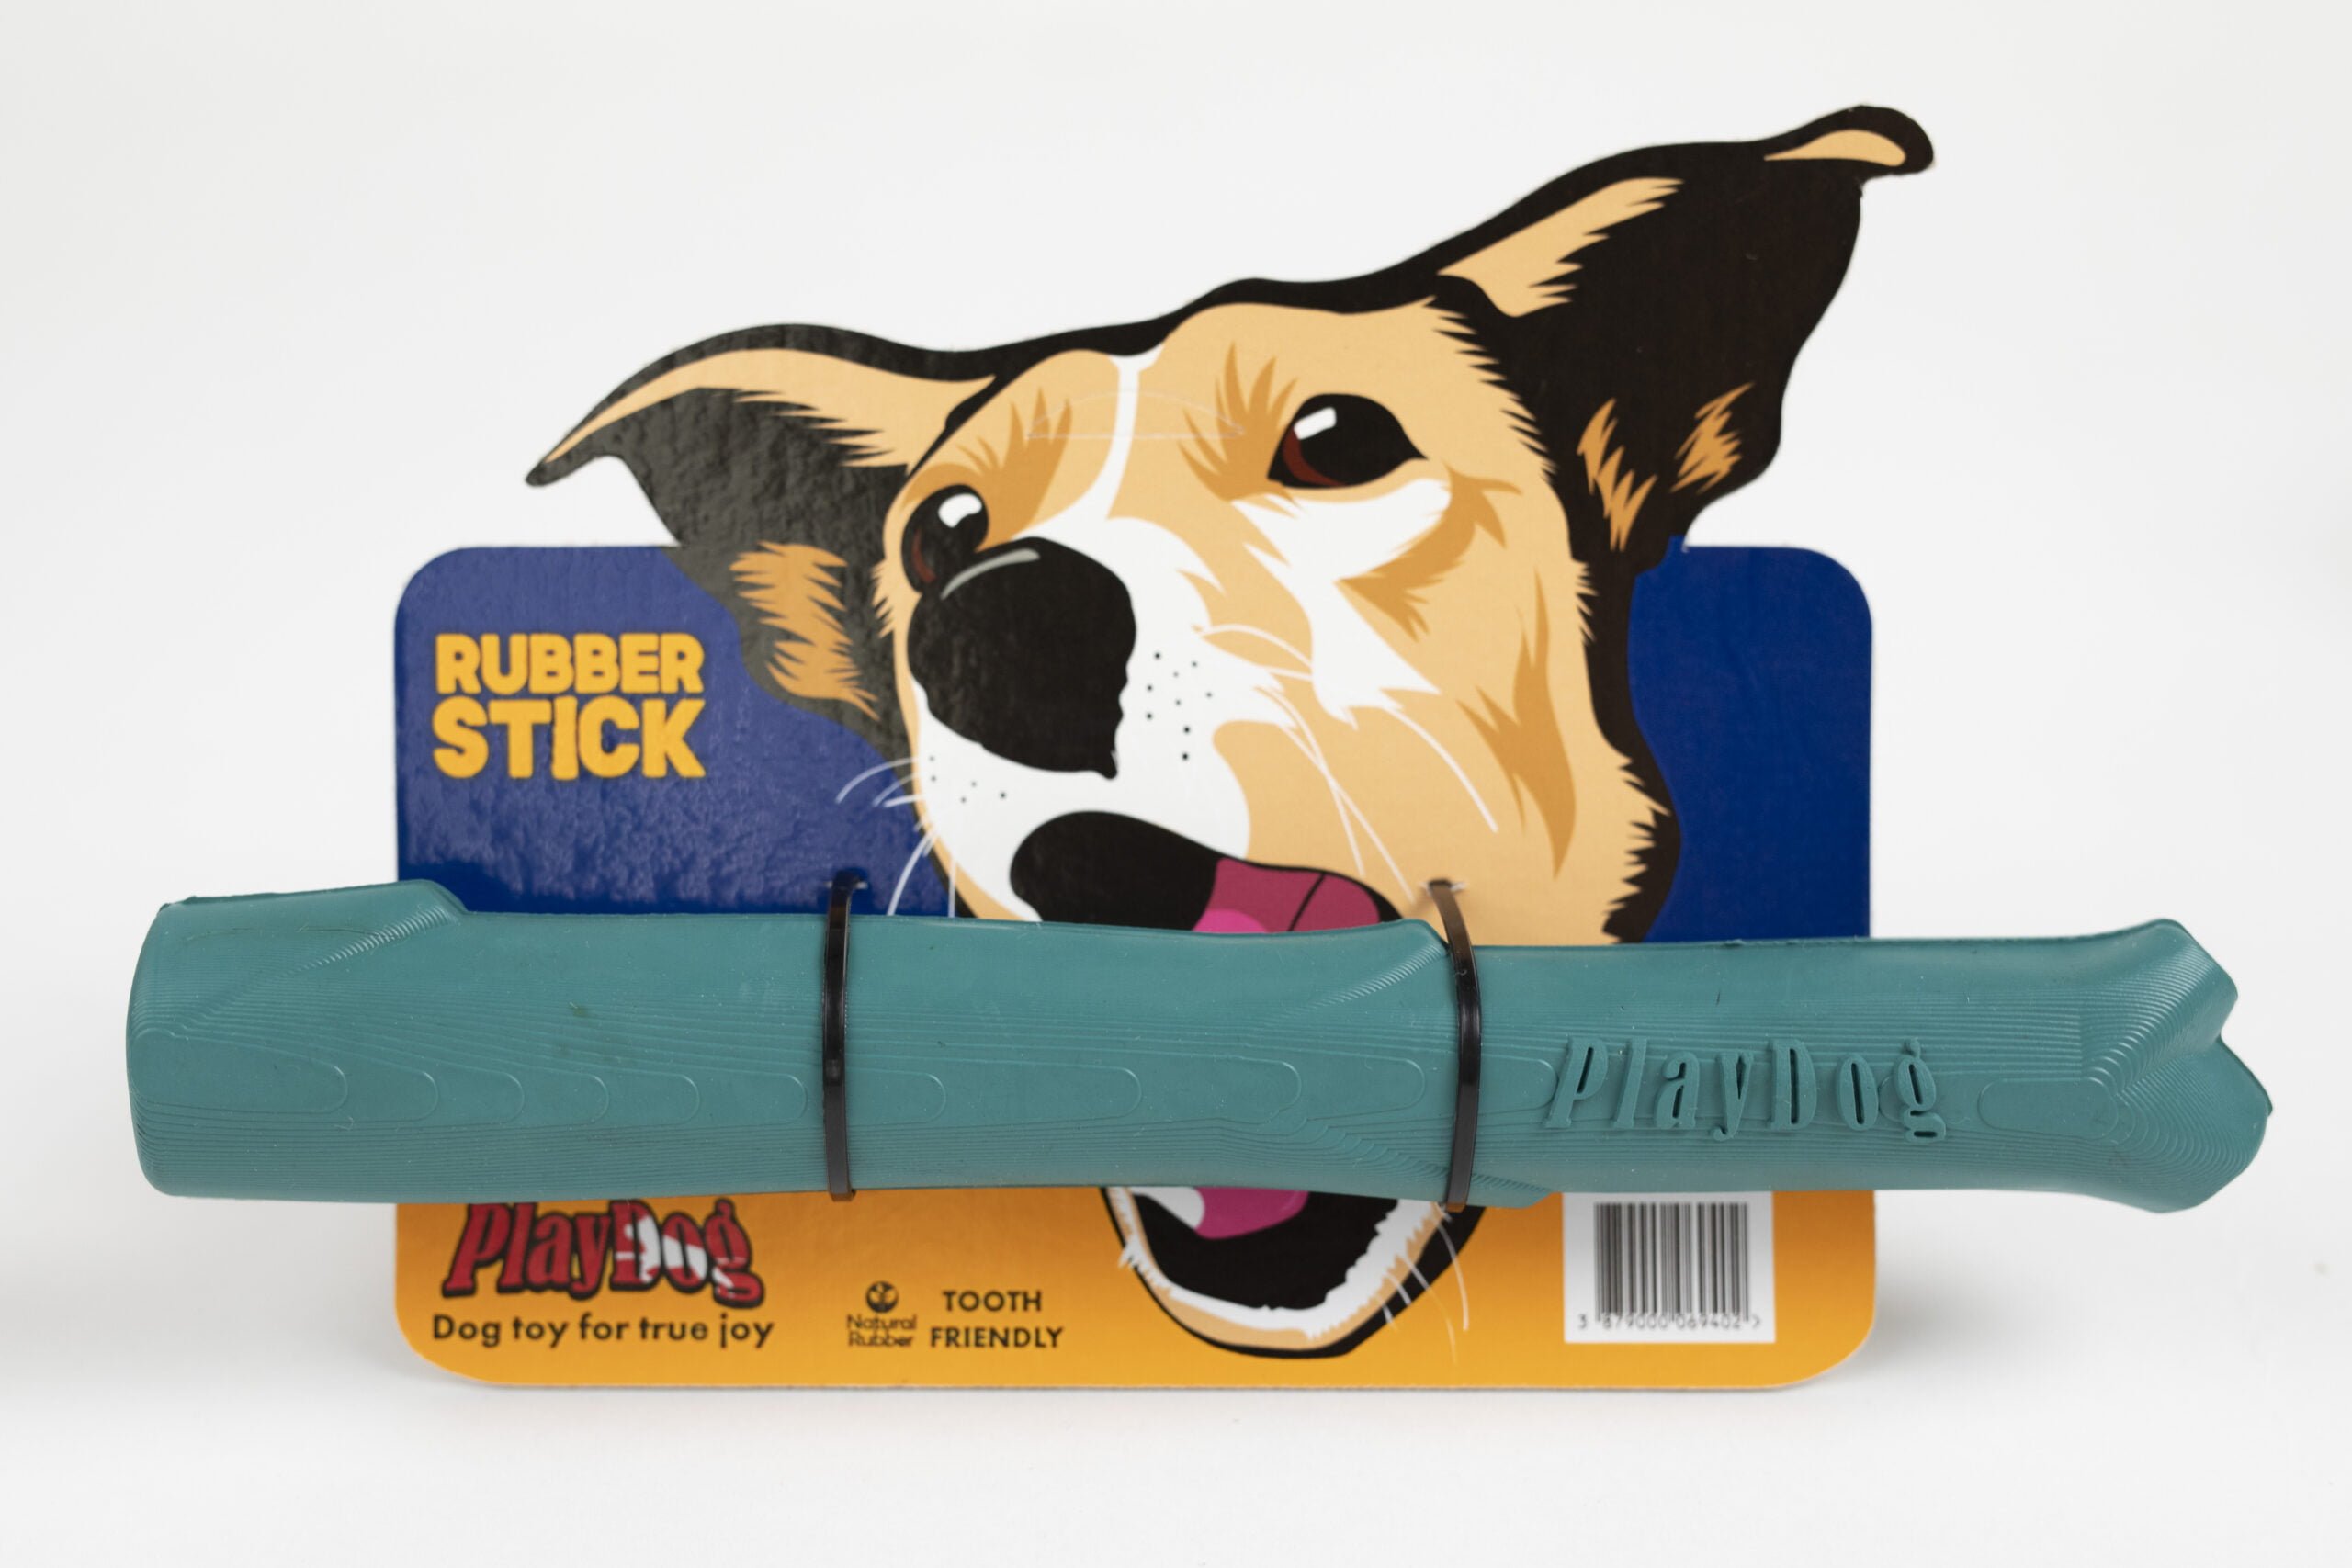 Rubber stick PlayDog